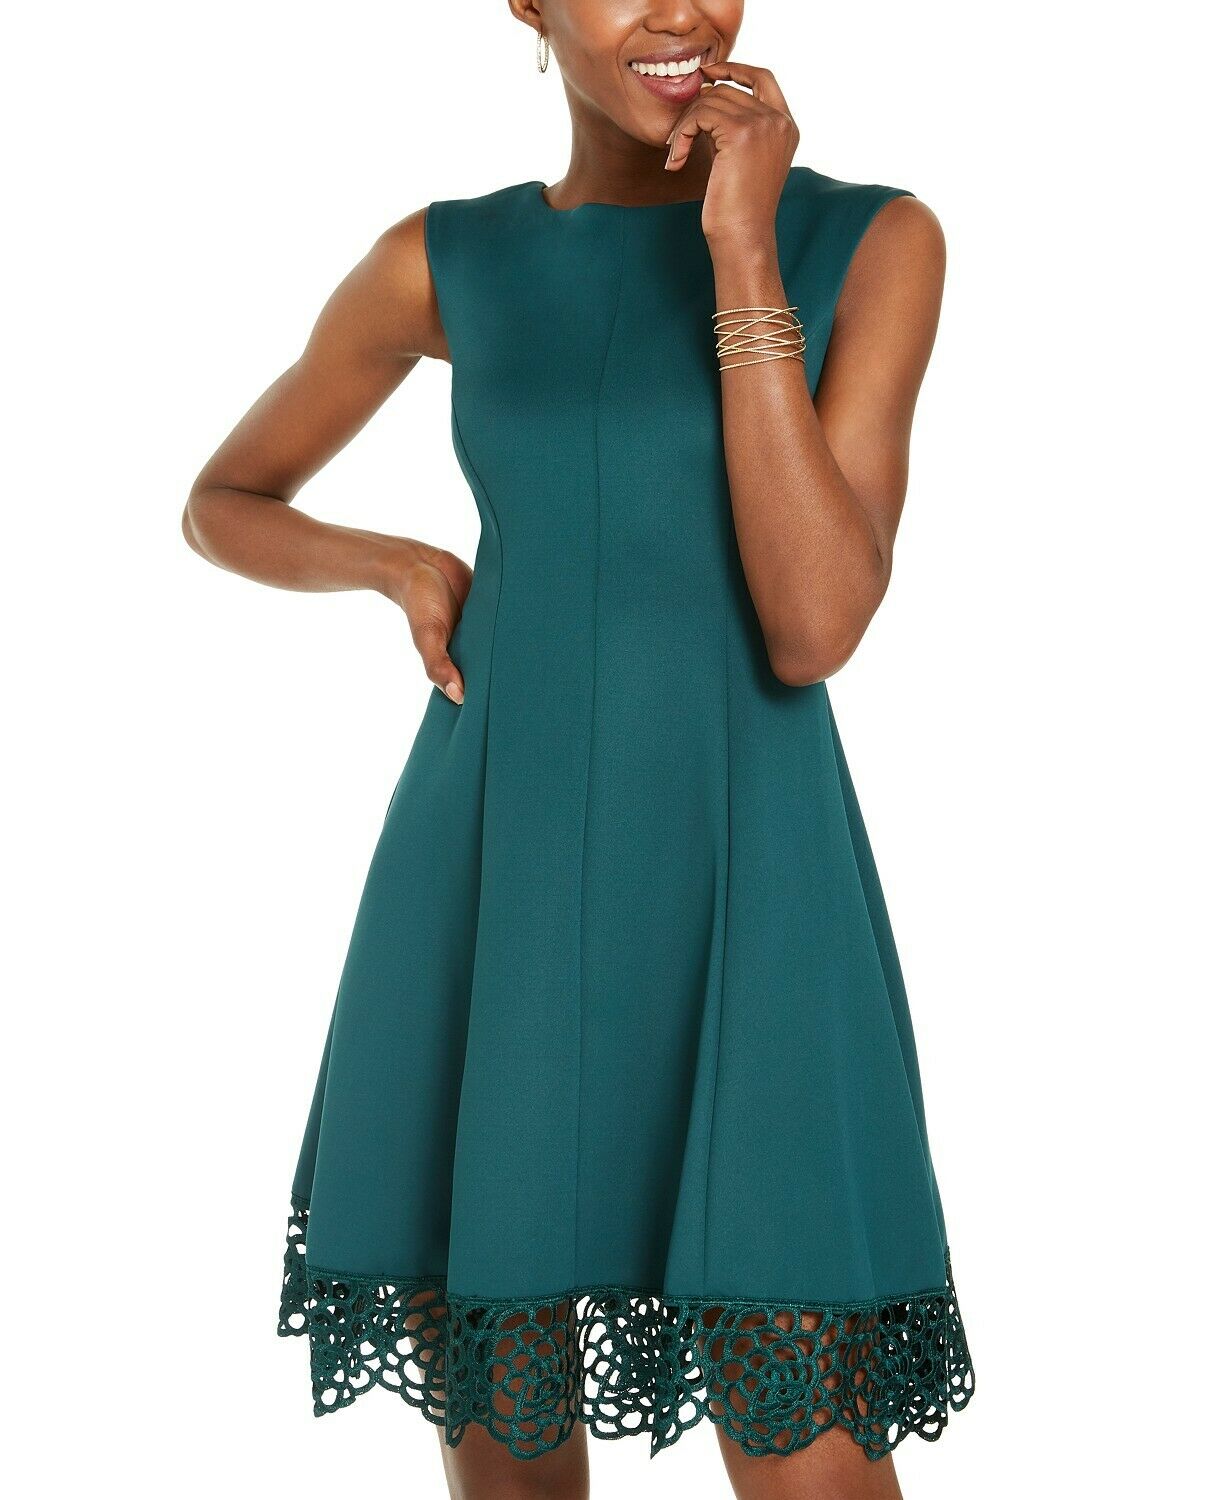 Donna Ricco Women's Green Scuba Fit & Flare Dress, Size 8